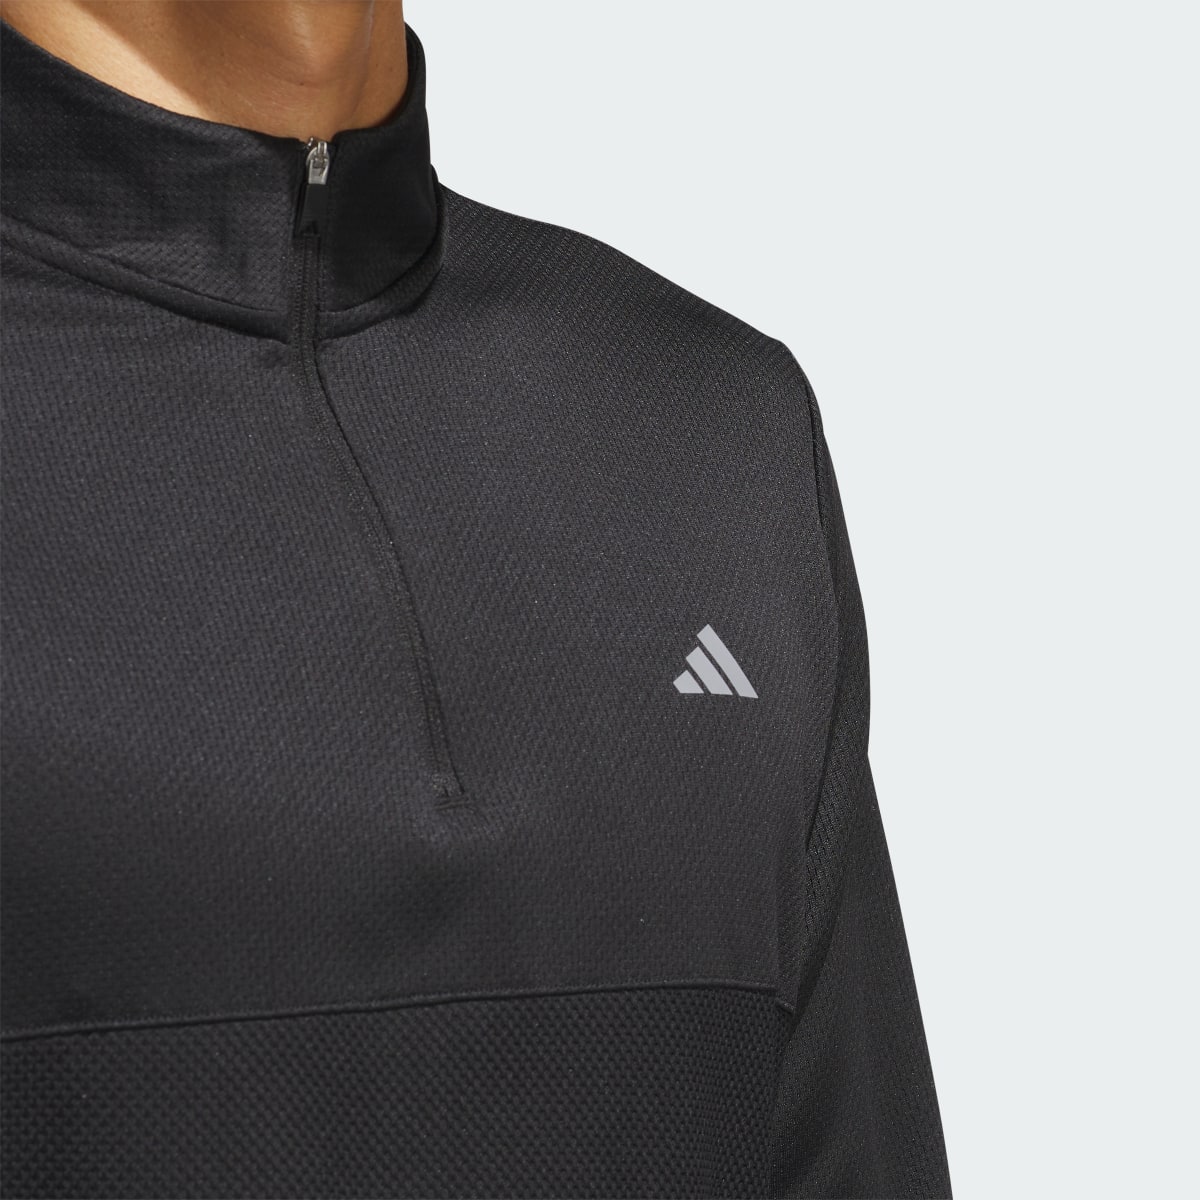 Adidas Ultimate365 Textured Quarter-Zip Top. 6